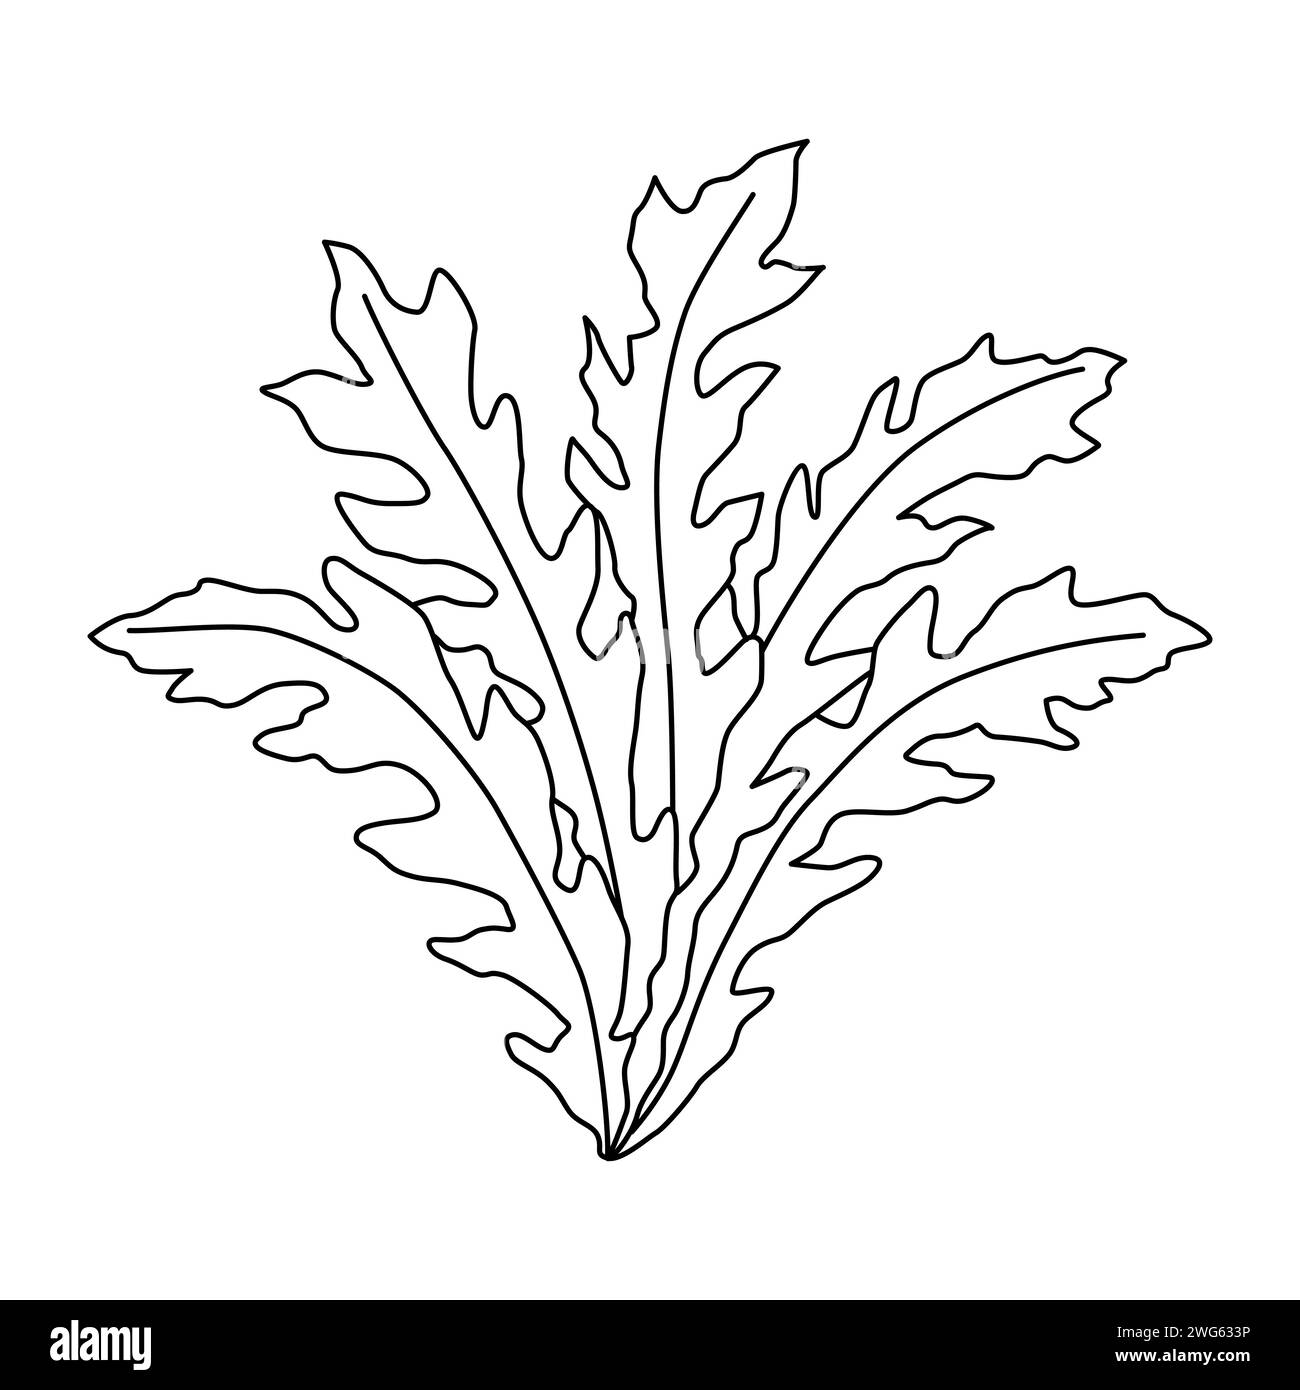 Arugula isolated on white background. Black and white vector illustration Stock Vector